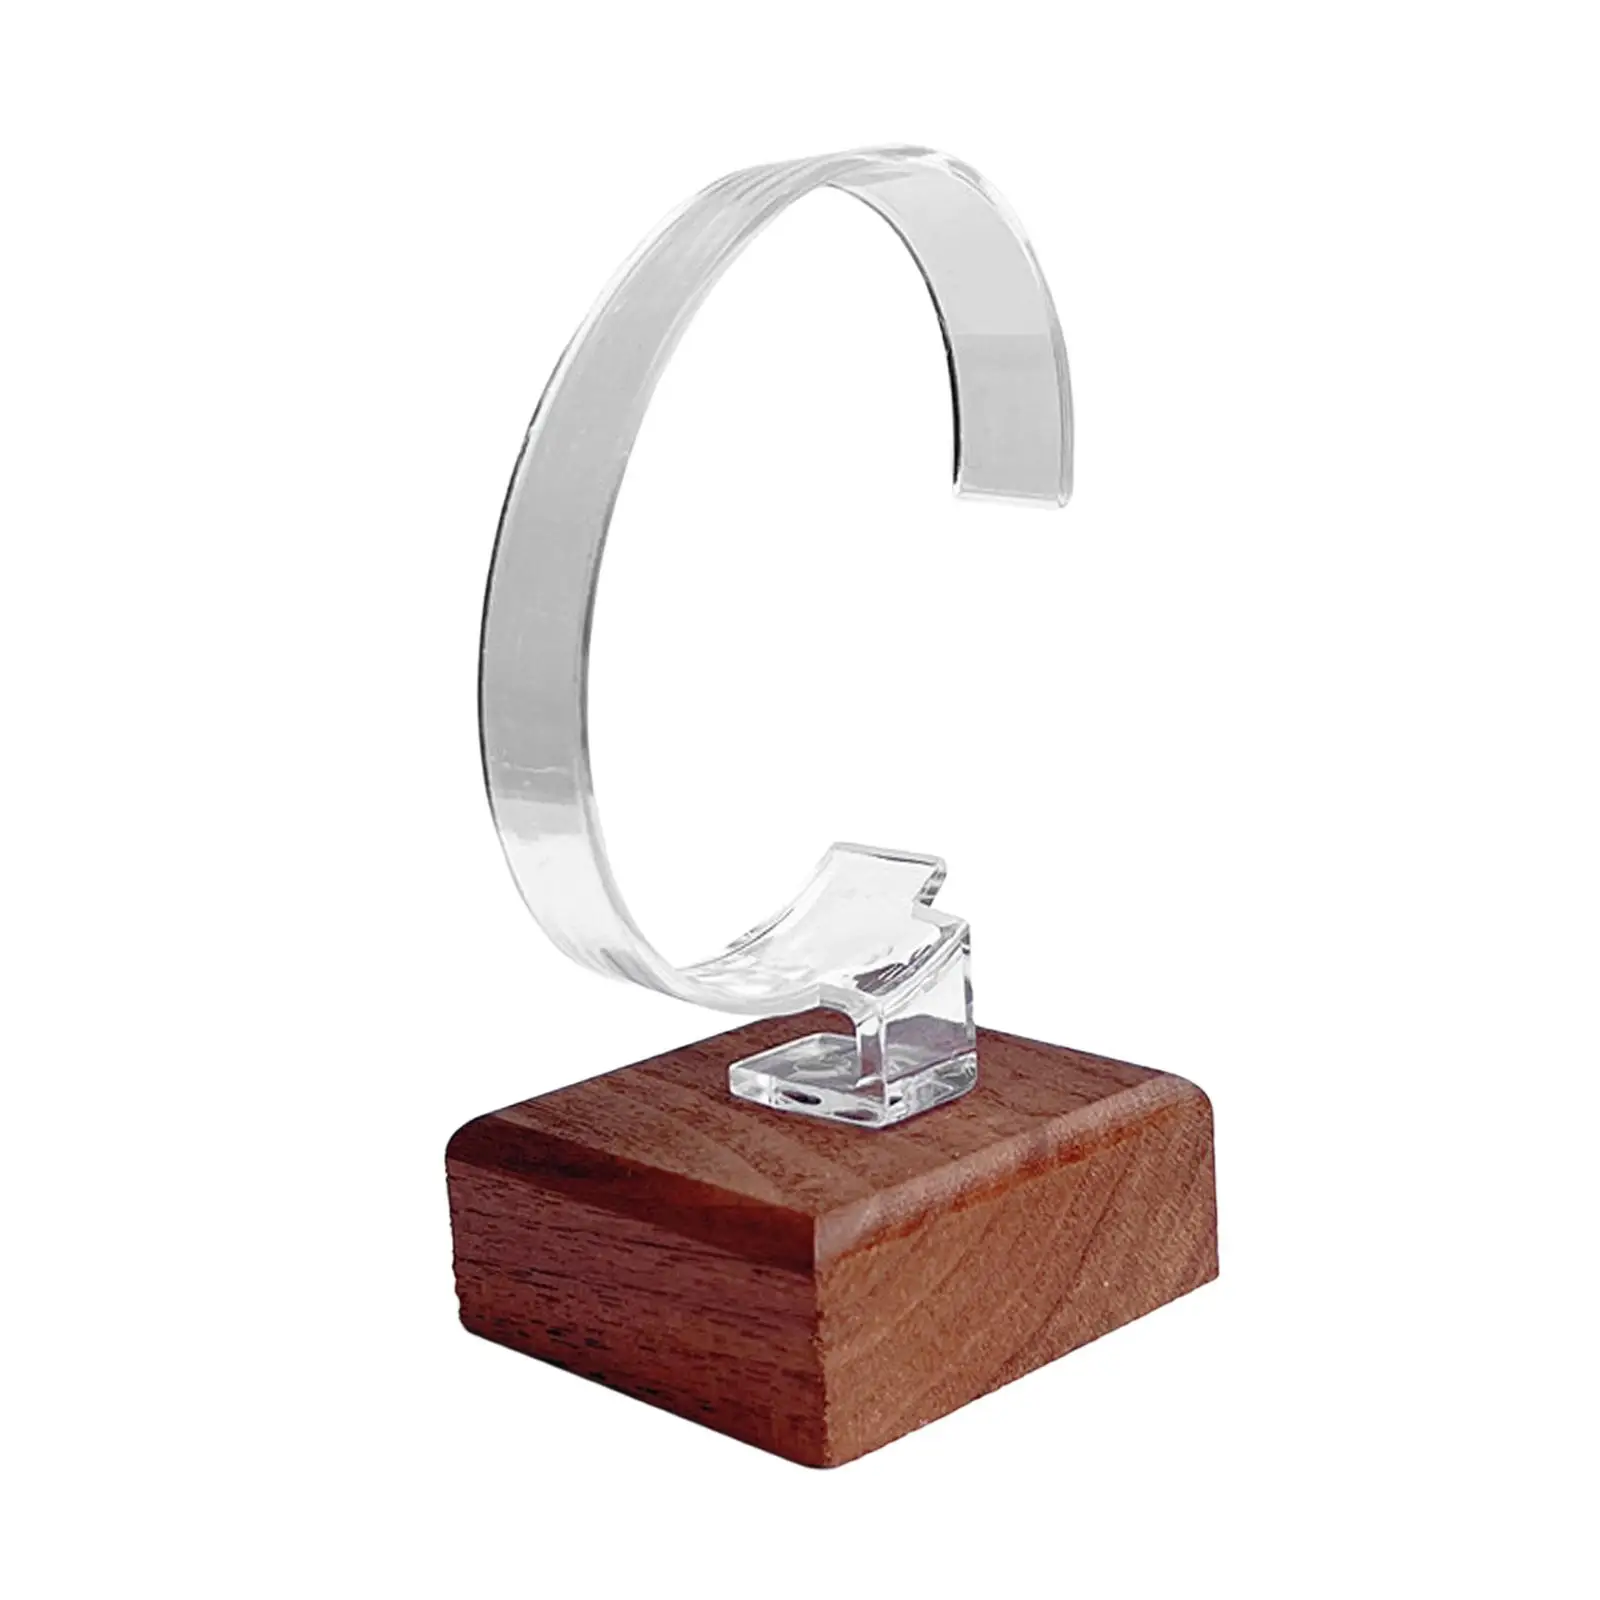 Multifunction Watch Display Stand Tool Wooden Base Jewelry Bracelet Bangle Display Shelf C Shape Watch Stand